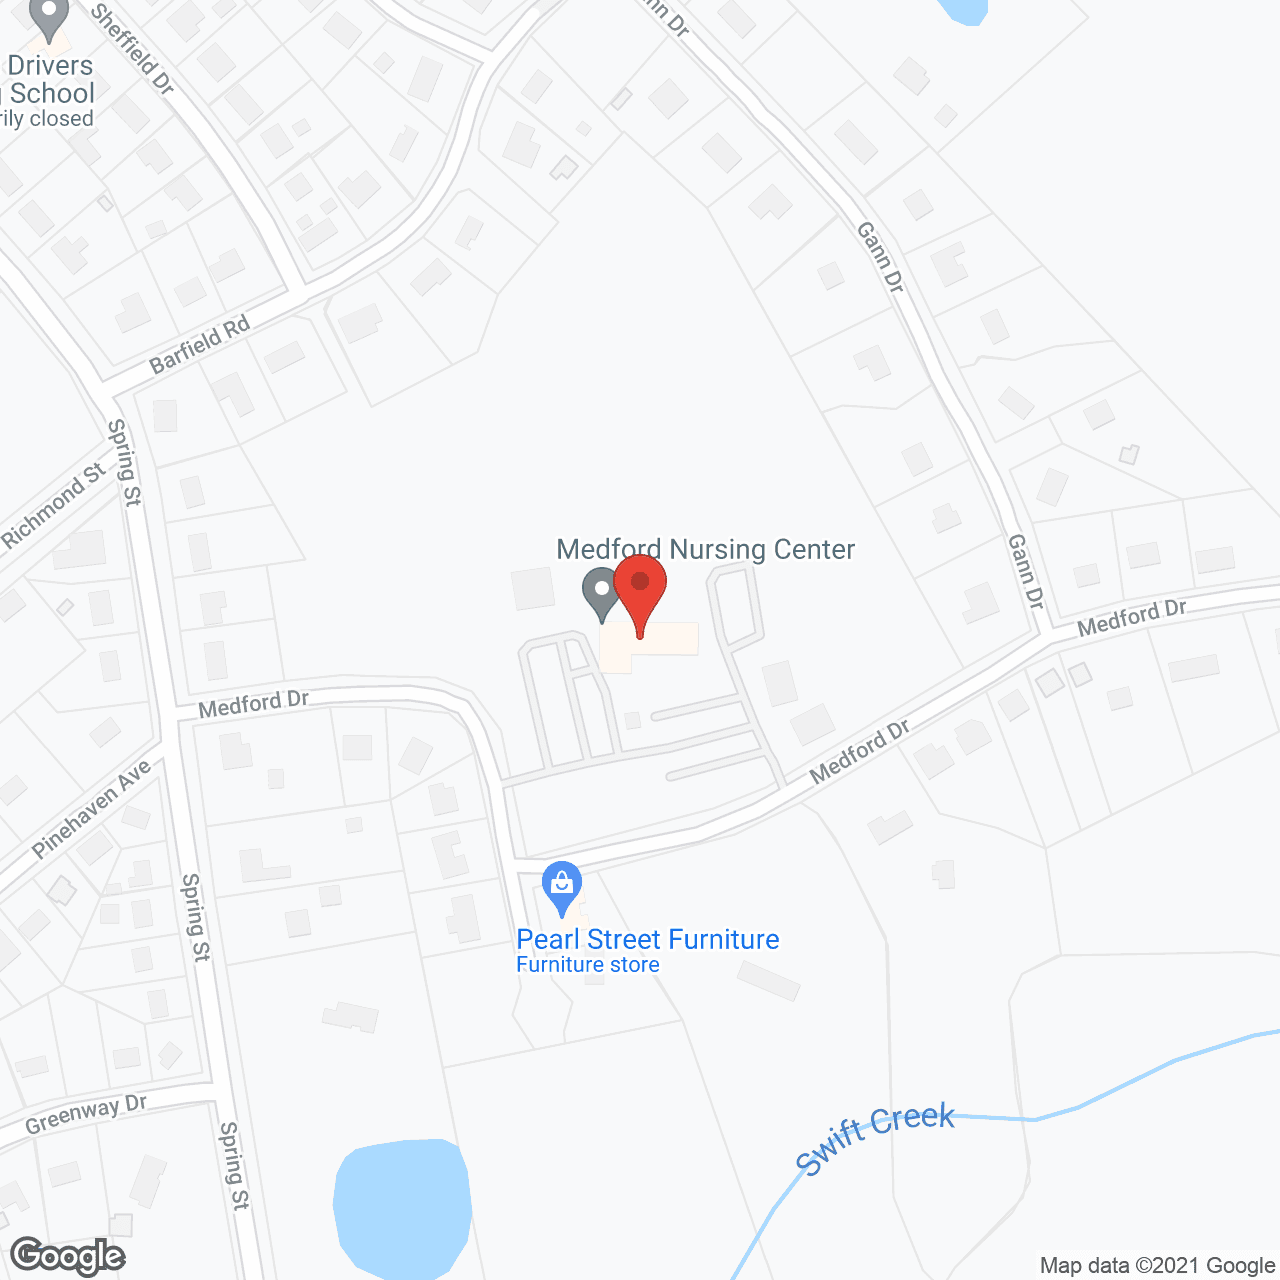 Medford Place Nursing Home in google map